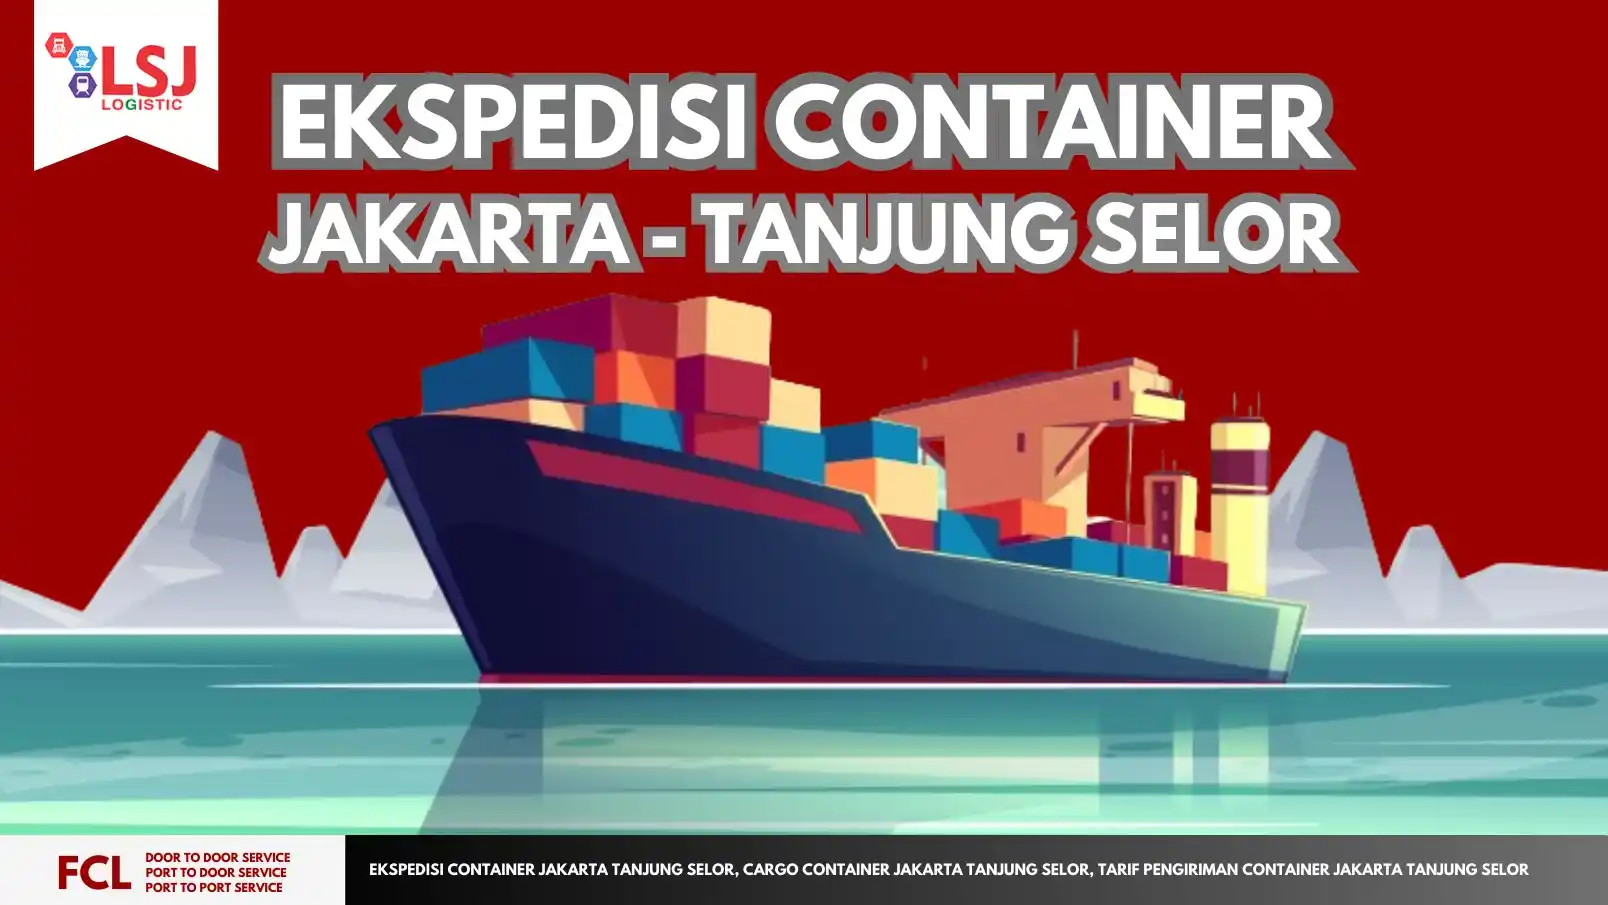 Ongkos Kirim Container Jakarta Tanjung Selor